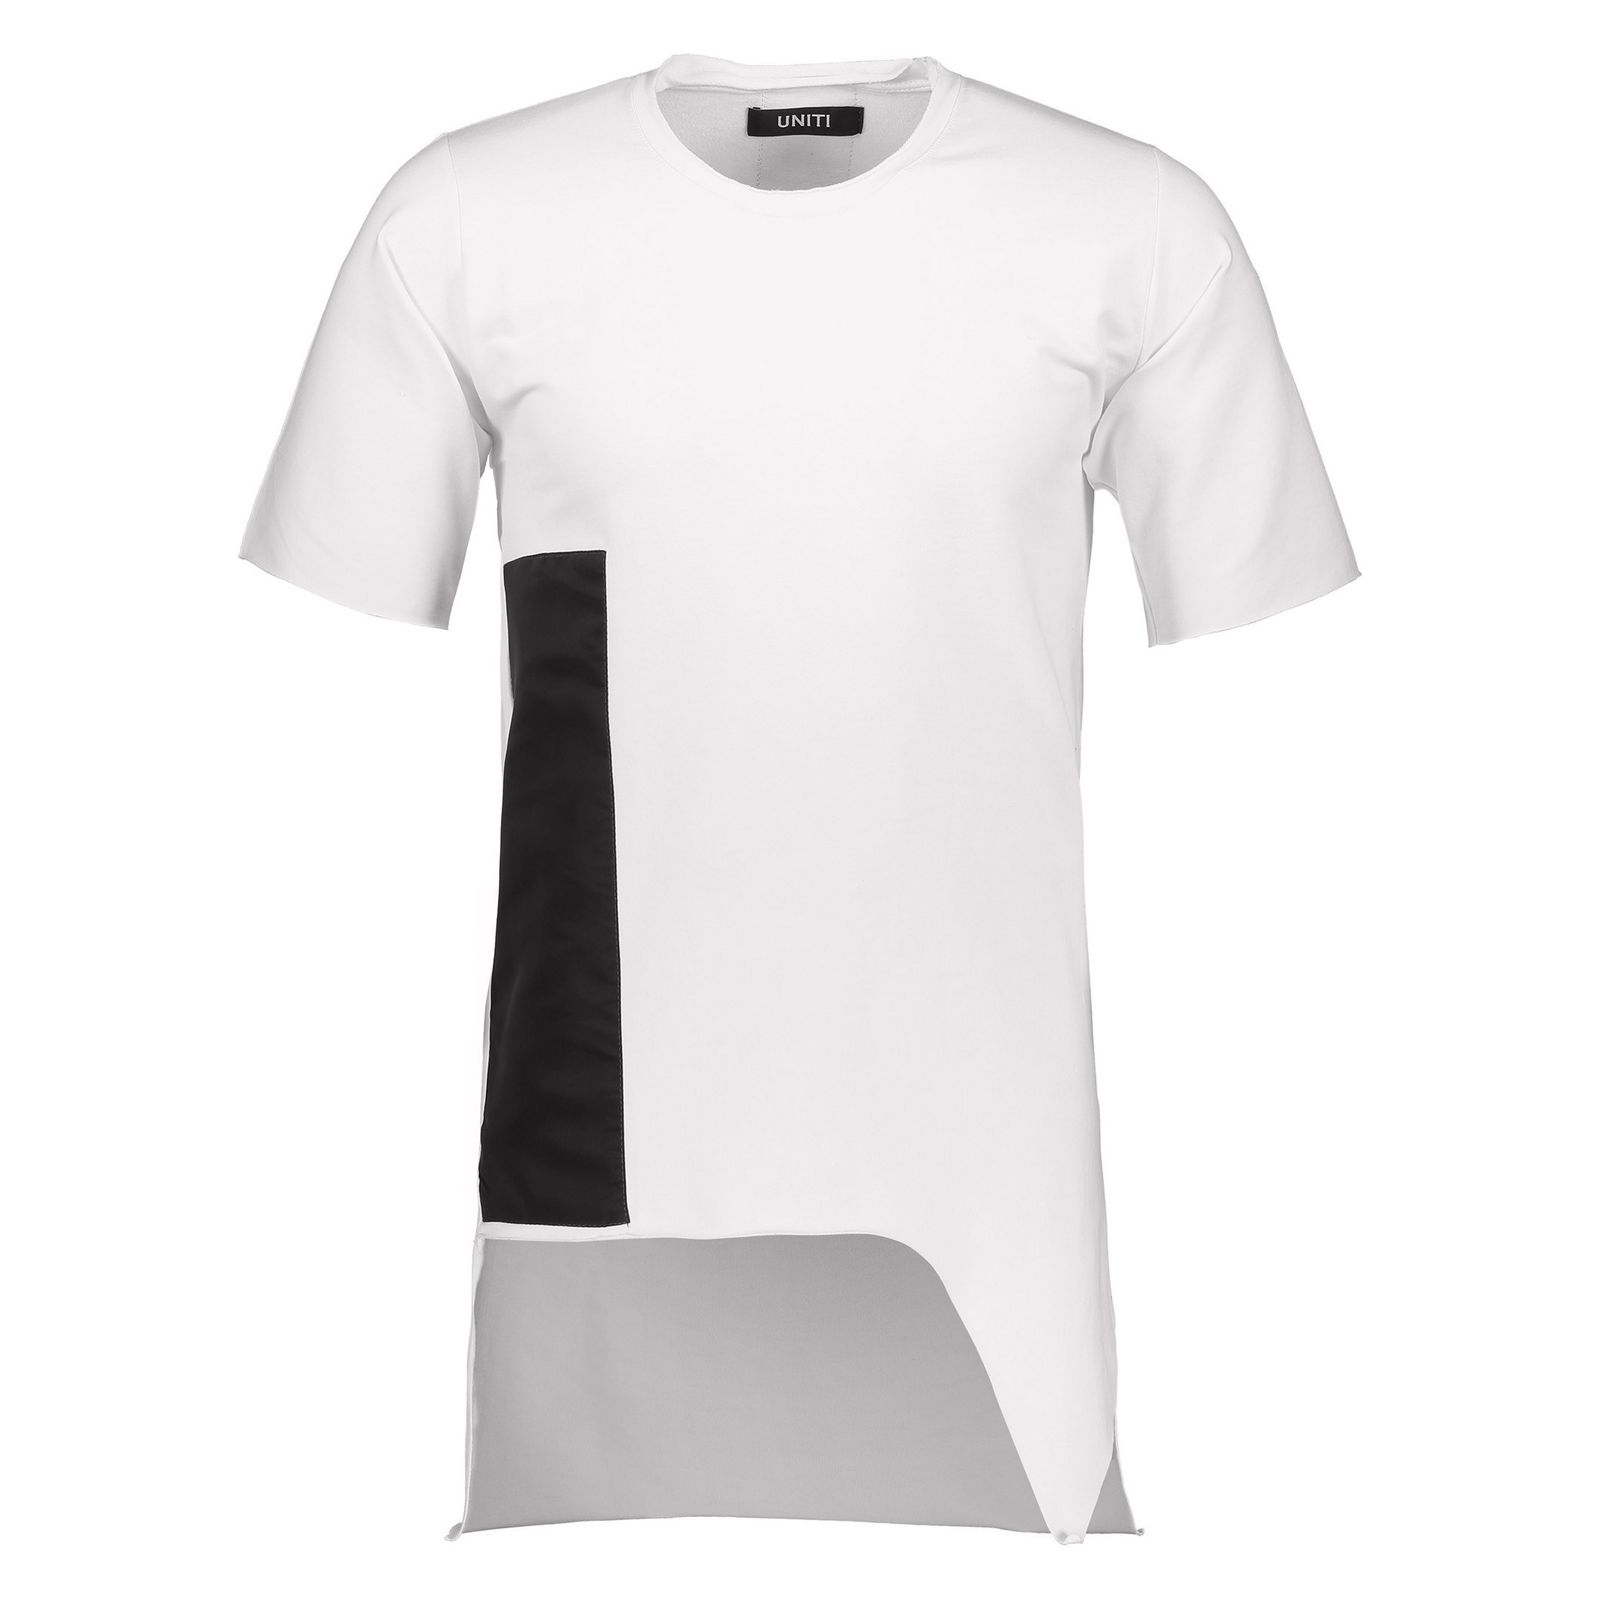 تی شرت ویسکوز یقه گرد مردانه Memory - یونیتی - سفيد - 1